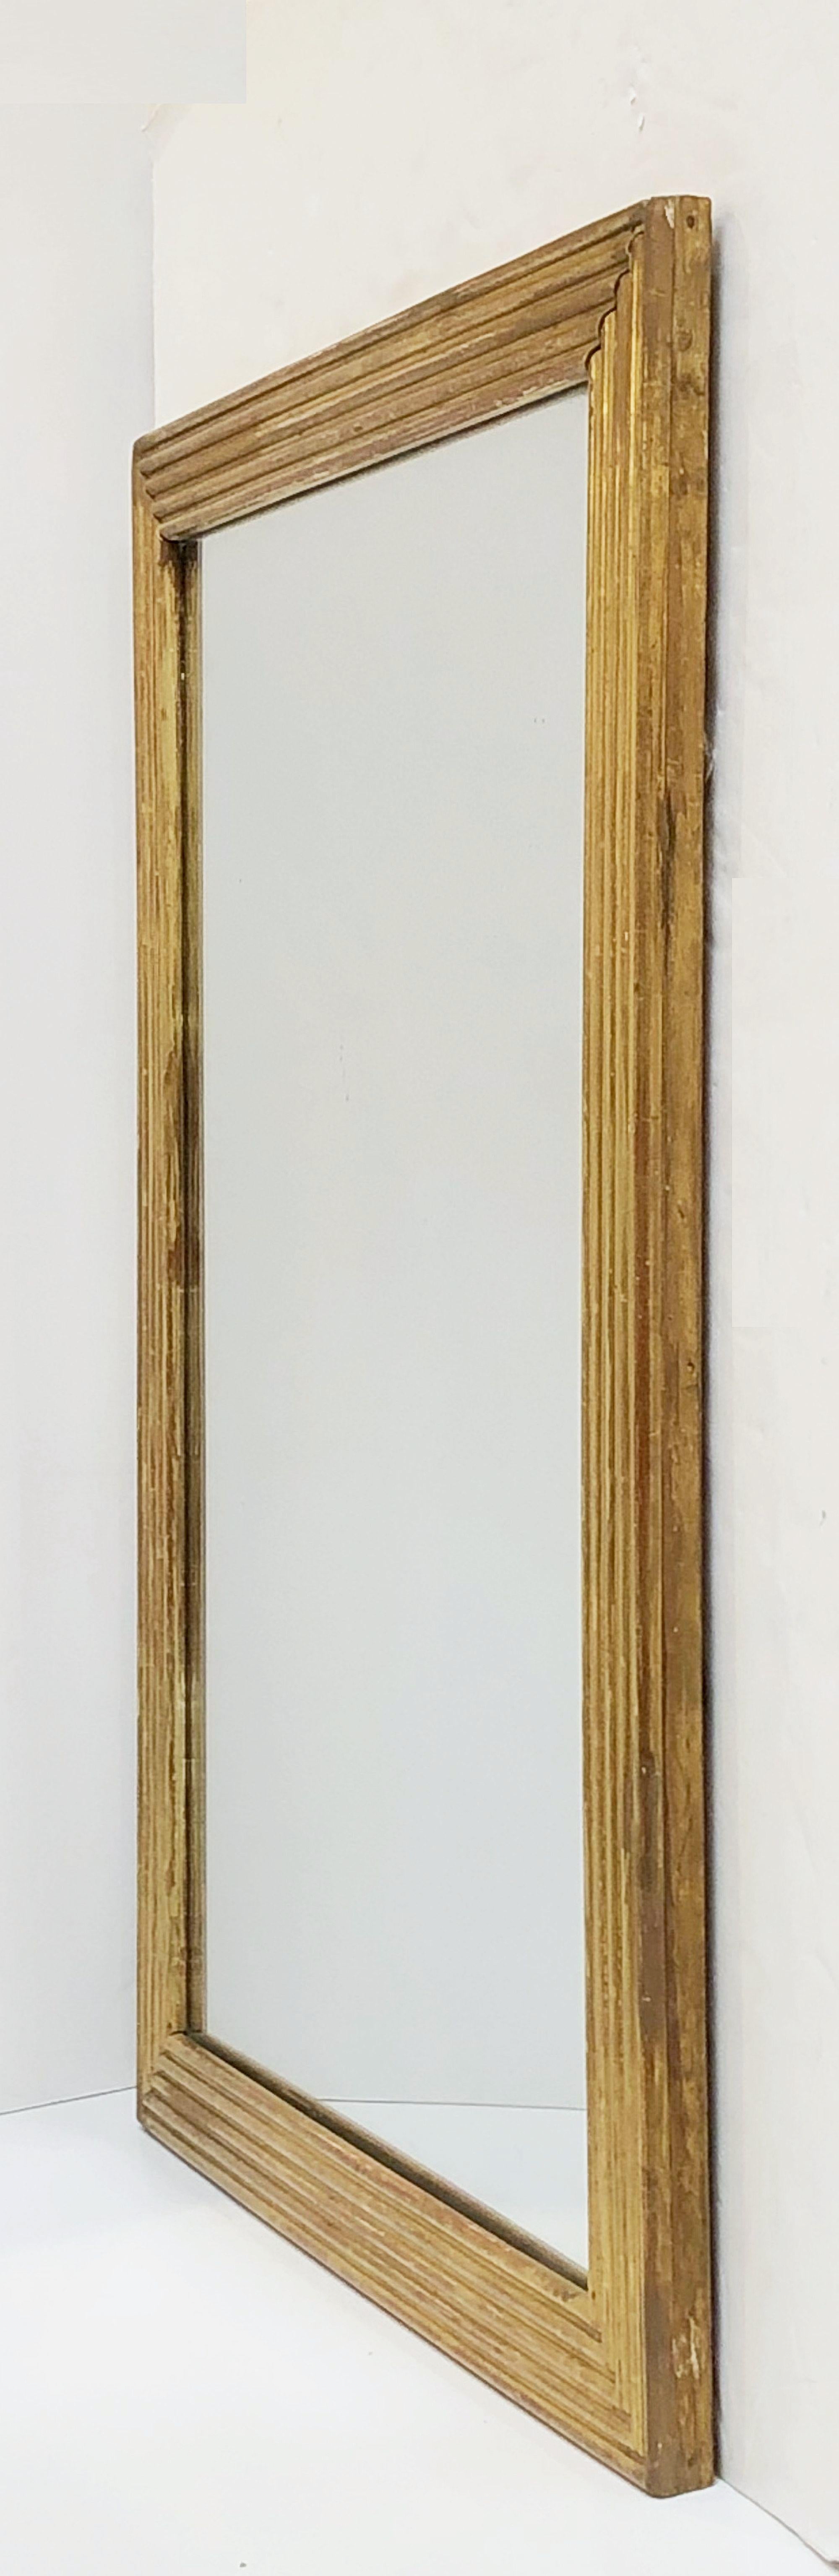 large gold rectangular wall mirror